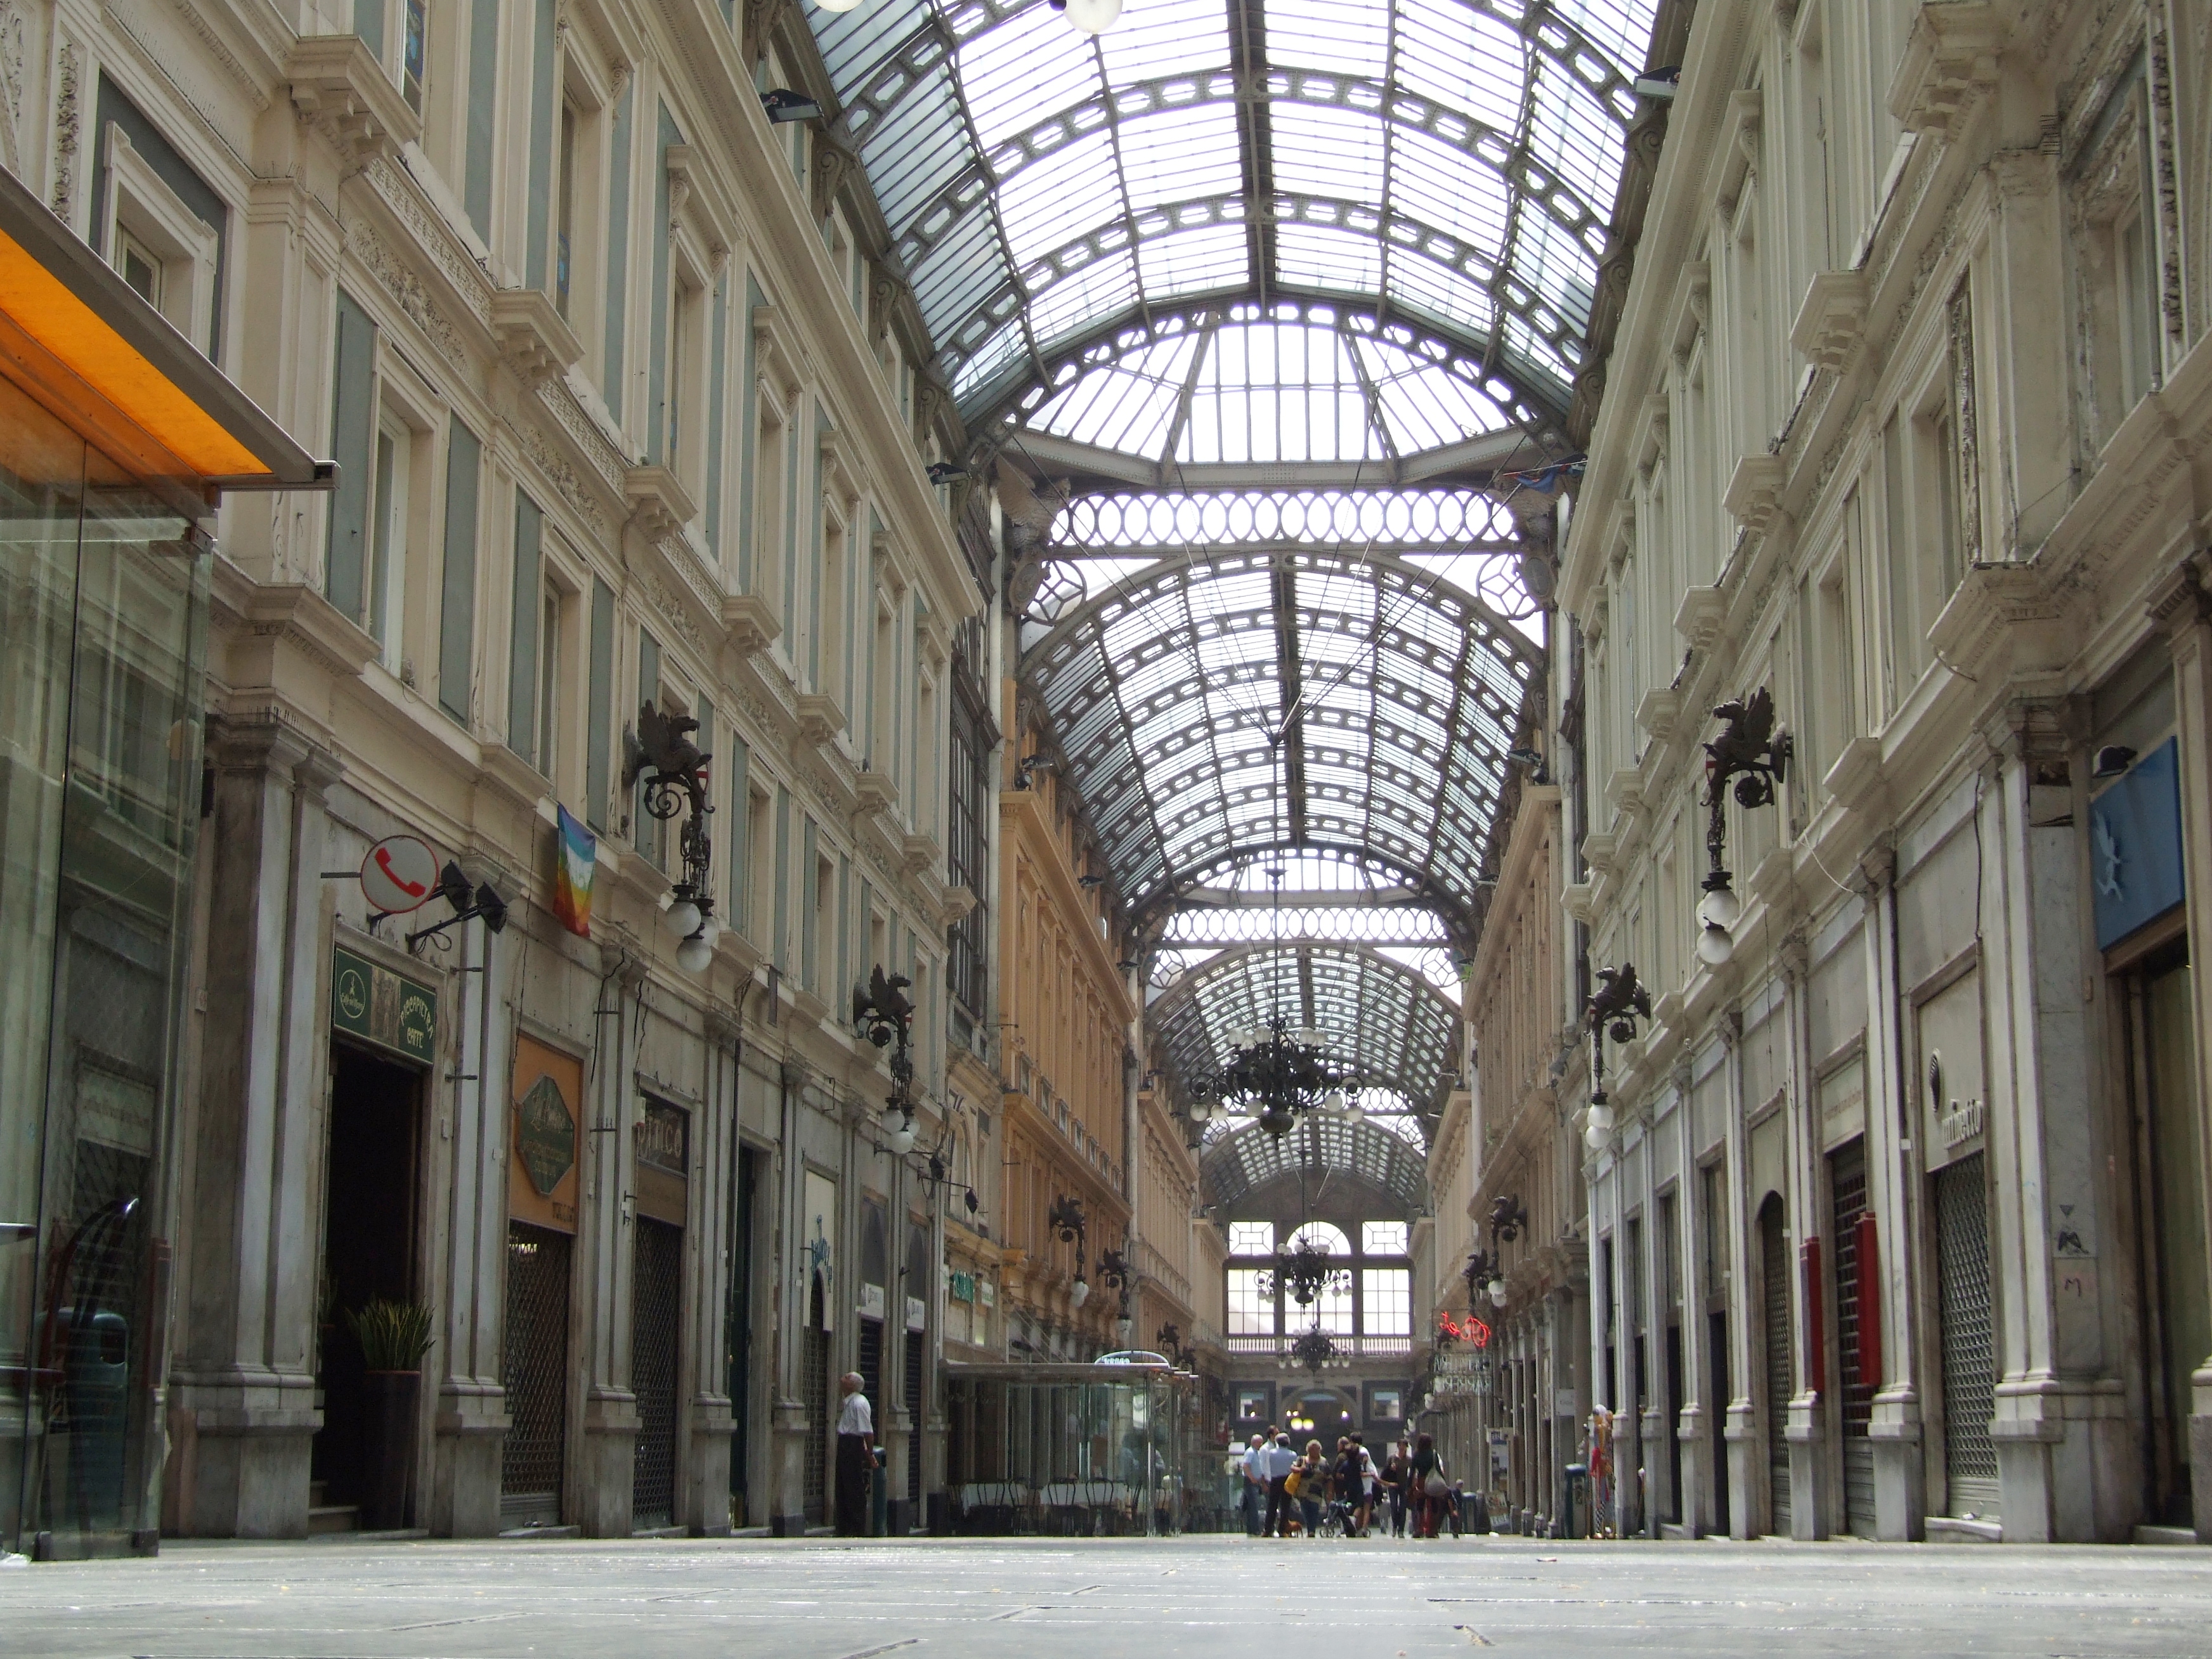 Genova-Galleria-Liguria-Italy - Creative Commons by gnuckx, Bebo, Public, Maps, Metacafe, HQ Photo